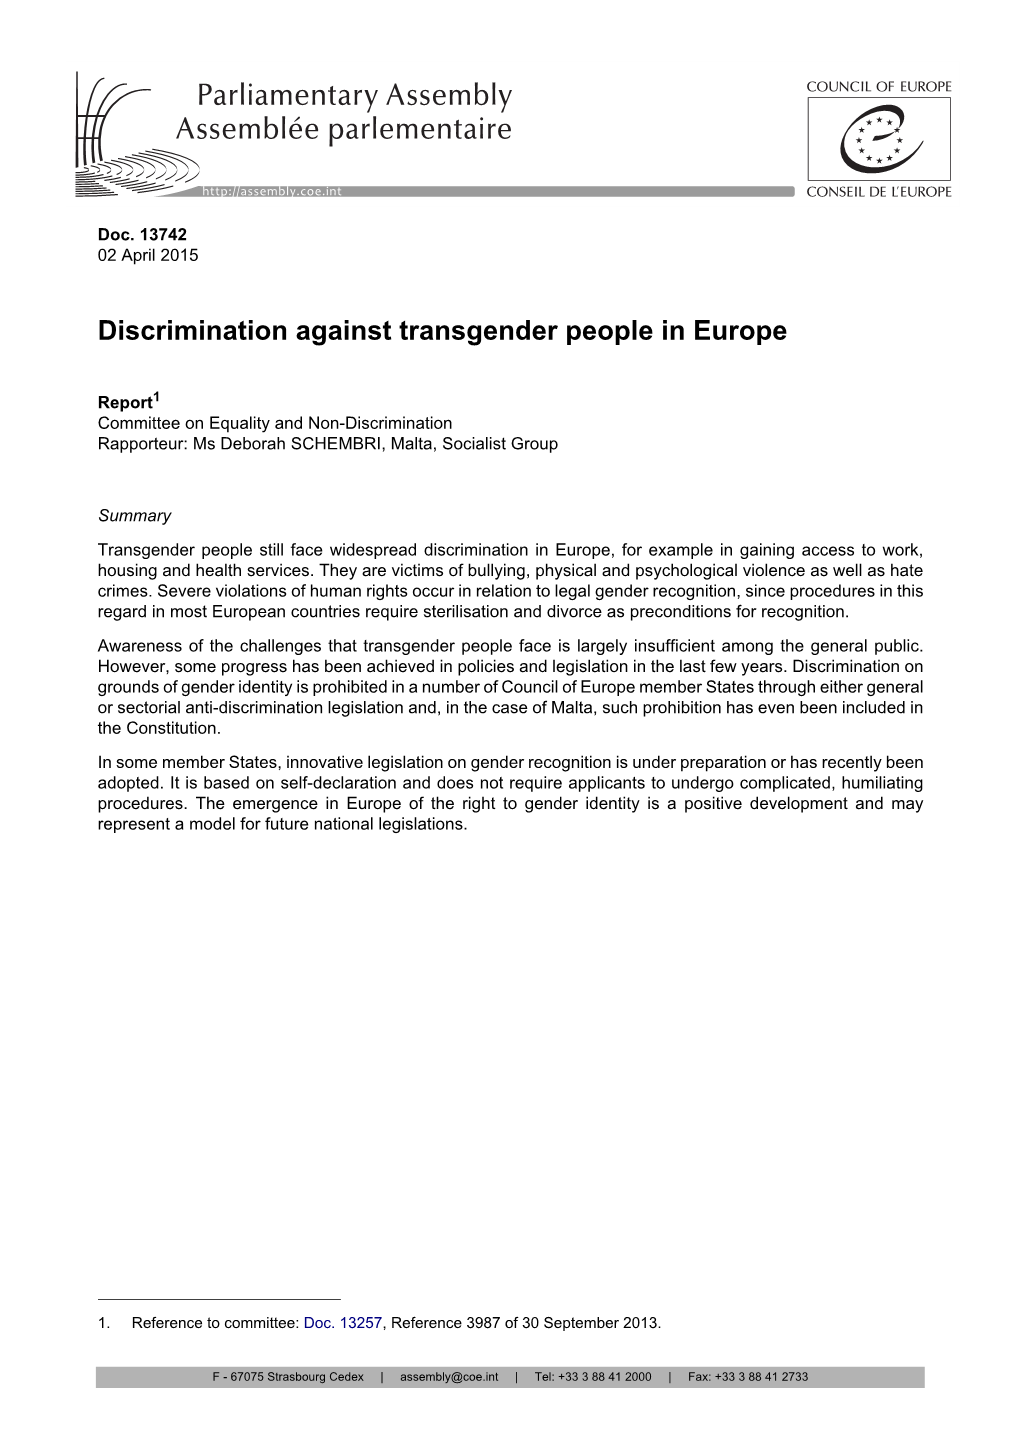 Discrimination Against Transgender People in Europe